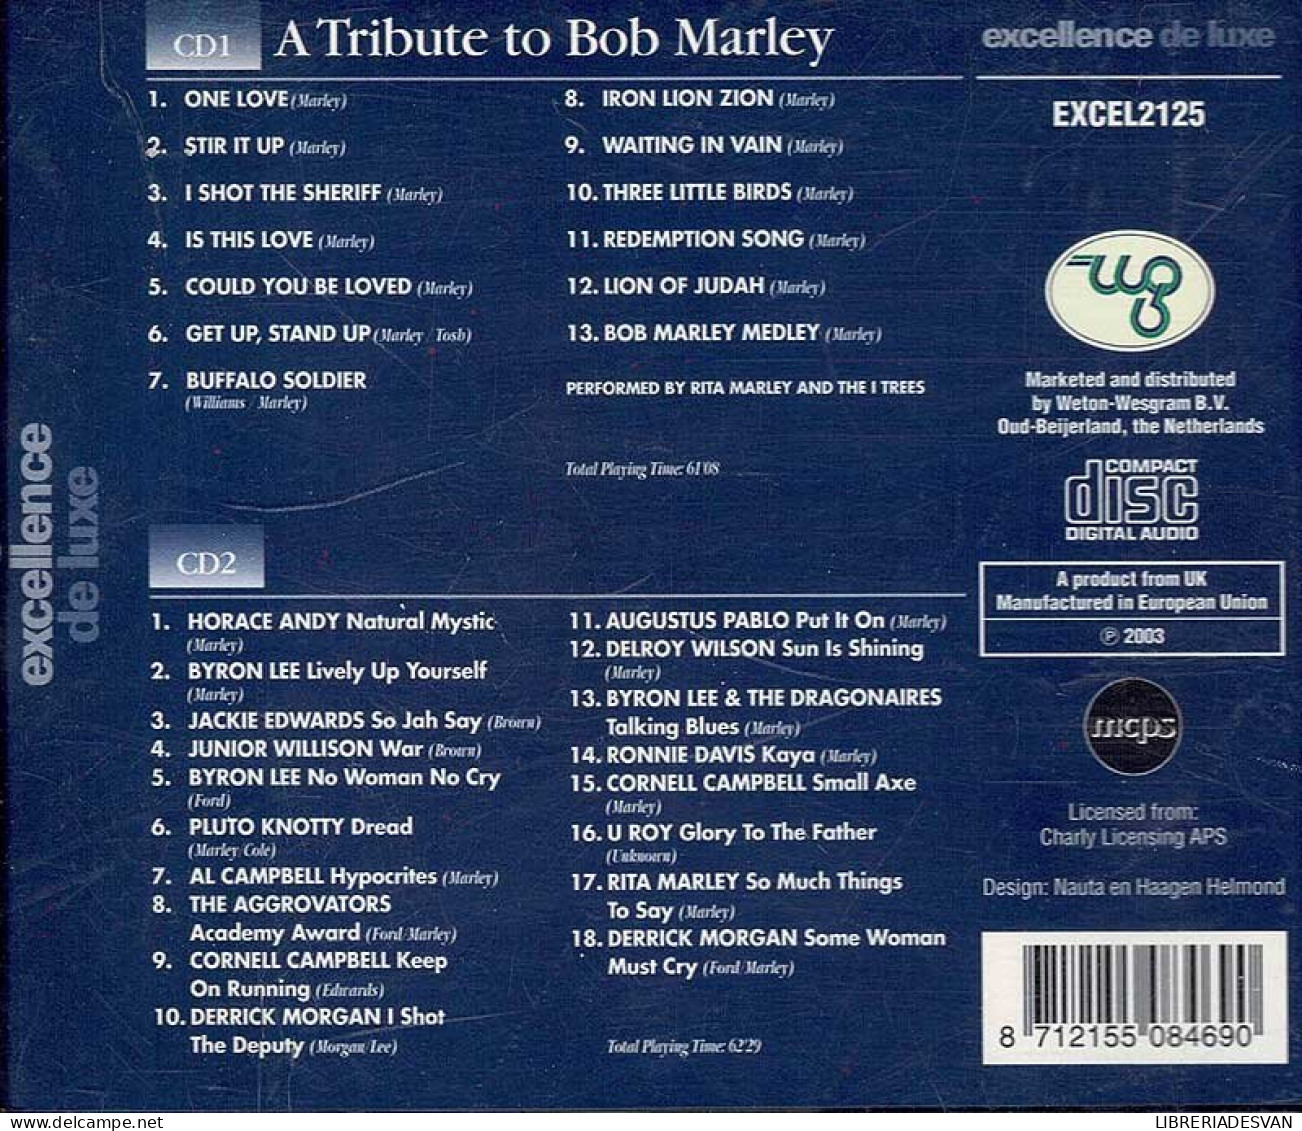 A Tribute To Bob Marley. 31 Legendary Reggae Songs. 2 X CD - Reggae